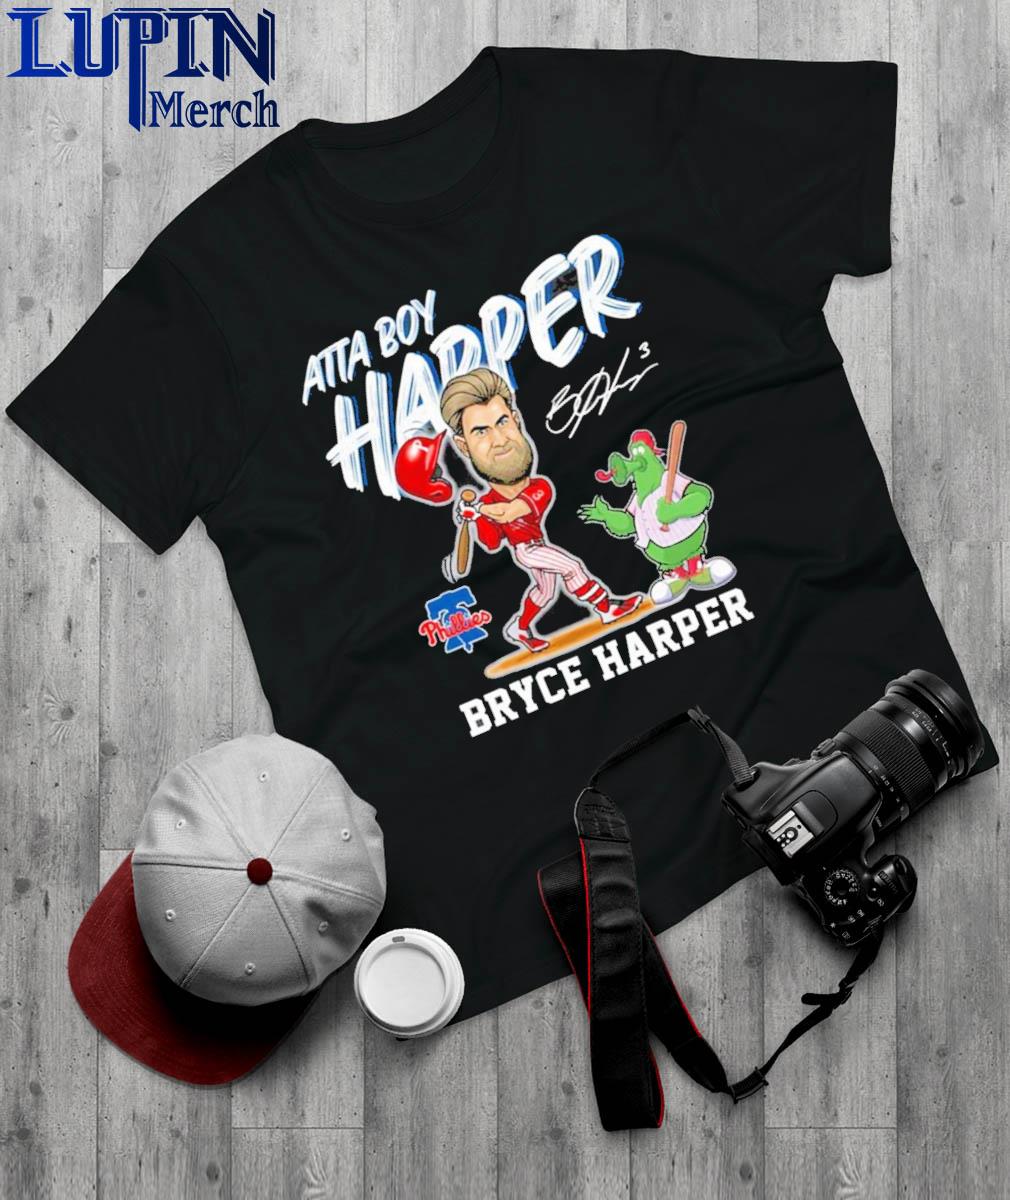 Official bryce Harper Atta-Boy Harper Shirt, hoodie, sweater, long sleeve  and tank top